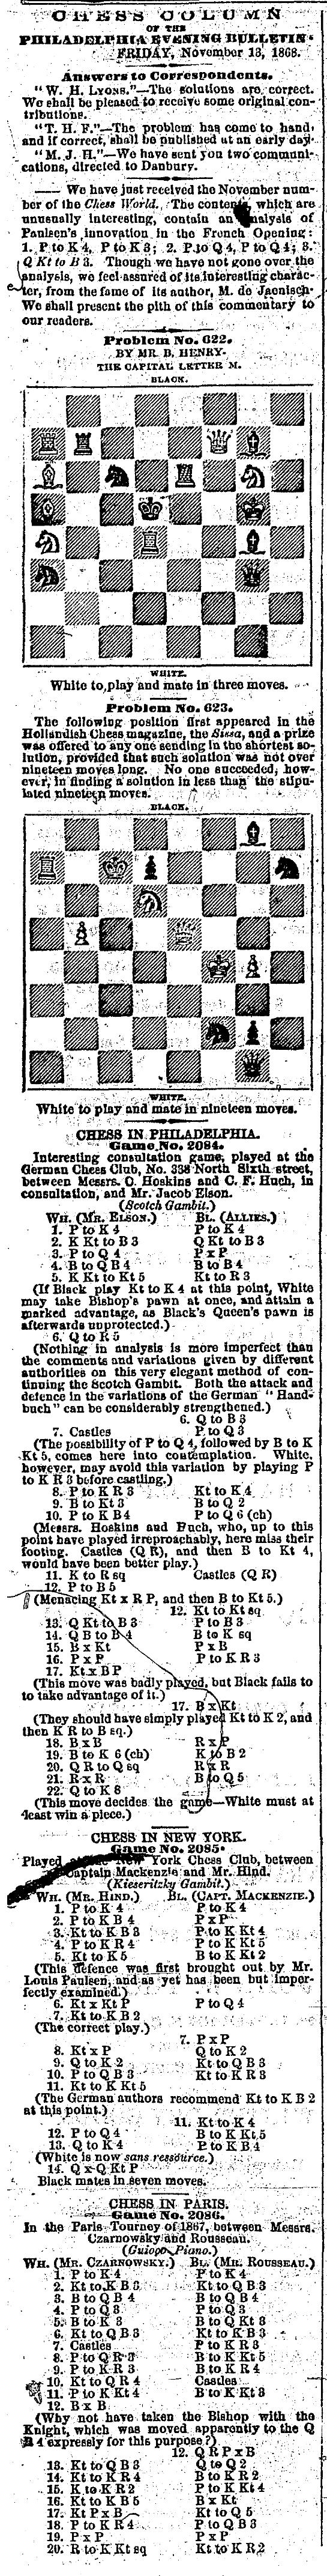 1868.11.20-01 Philadelphia Daily Evening Bulletin.jpg